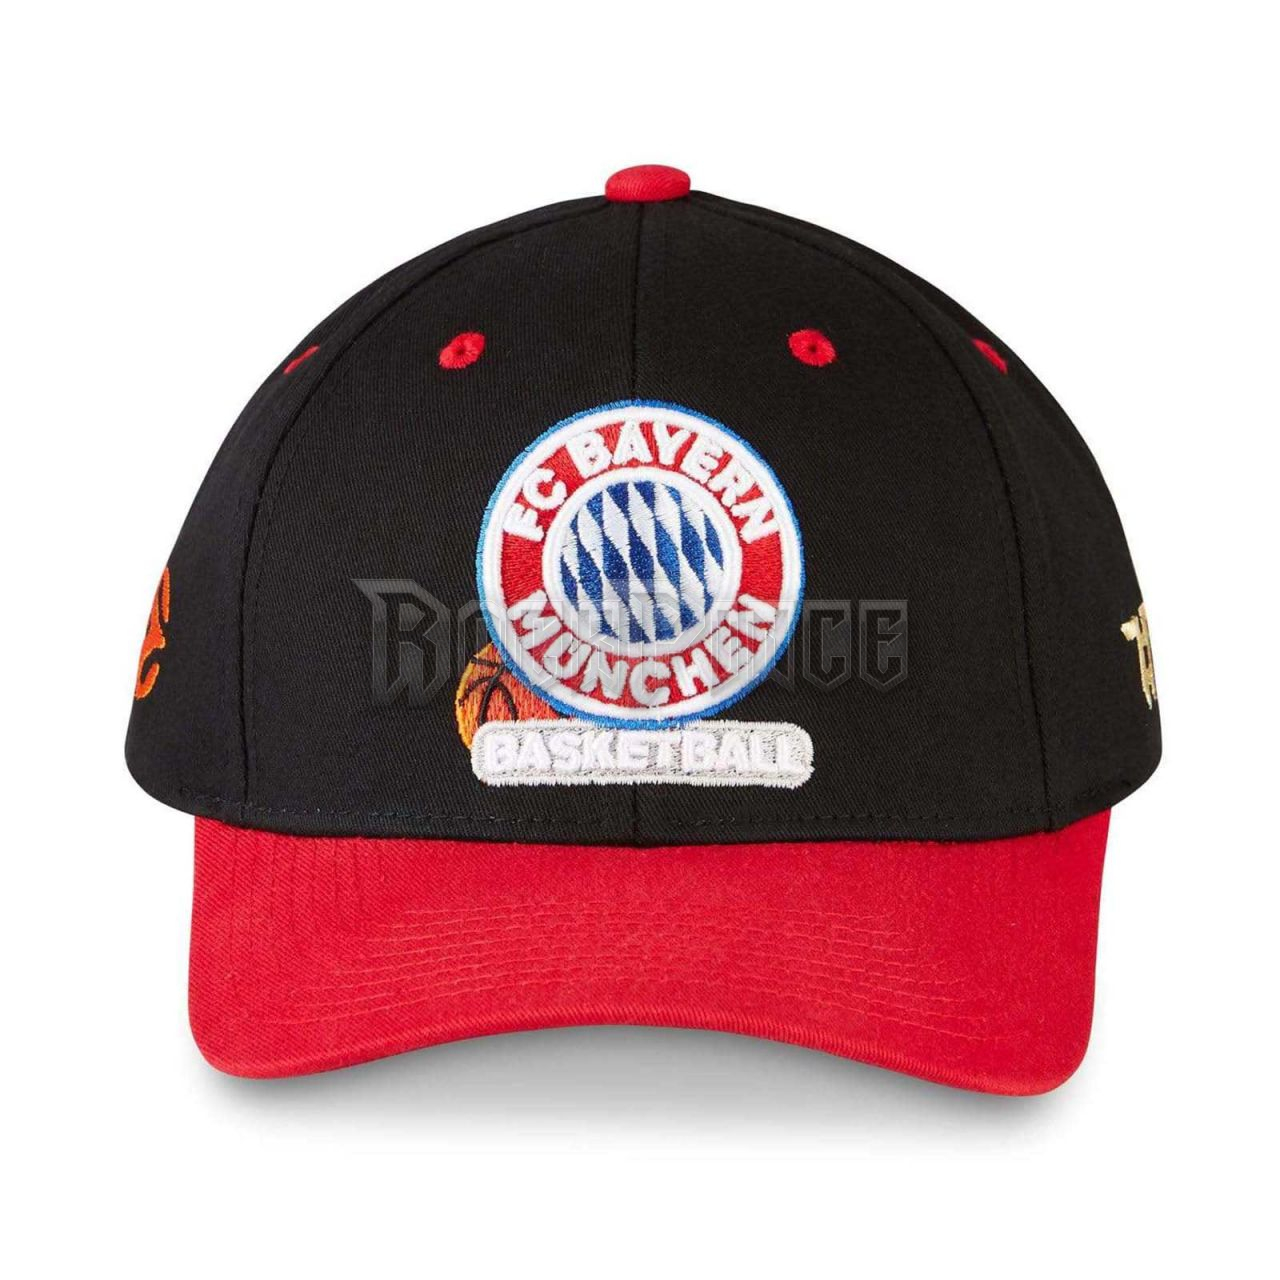 Tokyo Time - FC Bayern Munich - snapback sapka - TOKYOSBCAP28BR